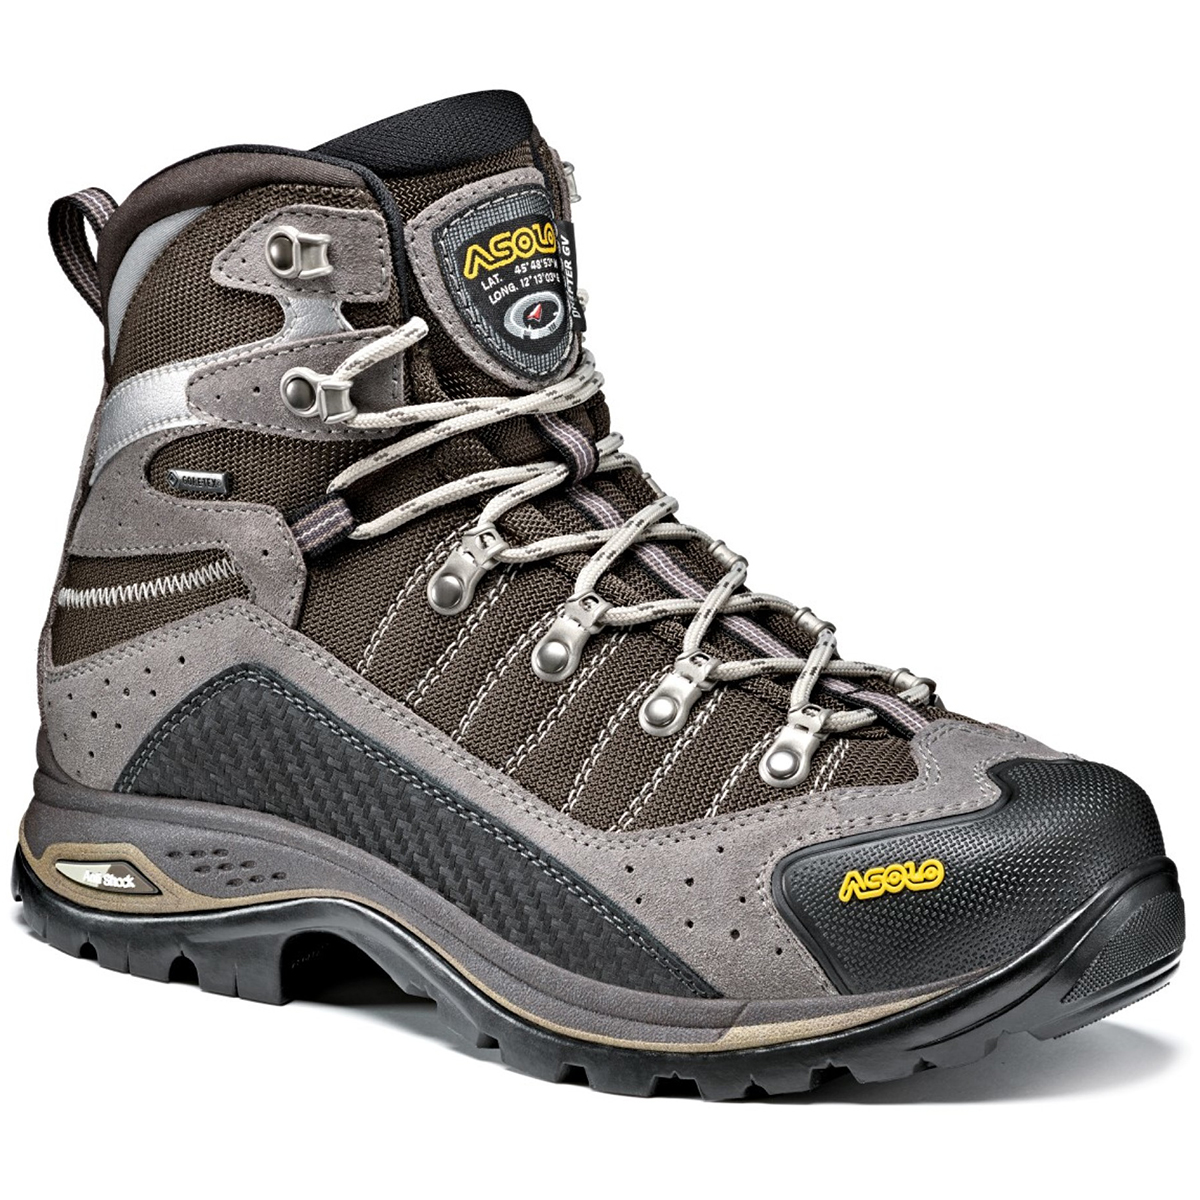 Asolo Men's Drifter  Evo Gv Hiking Boots - Black, 9